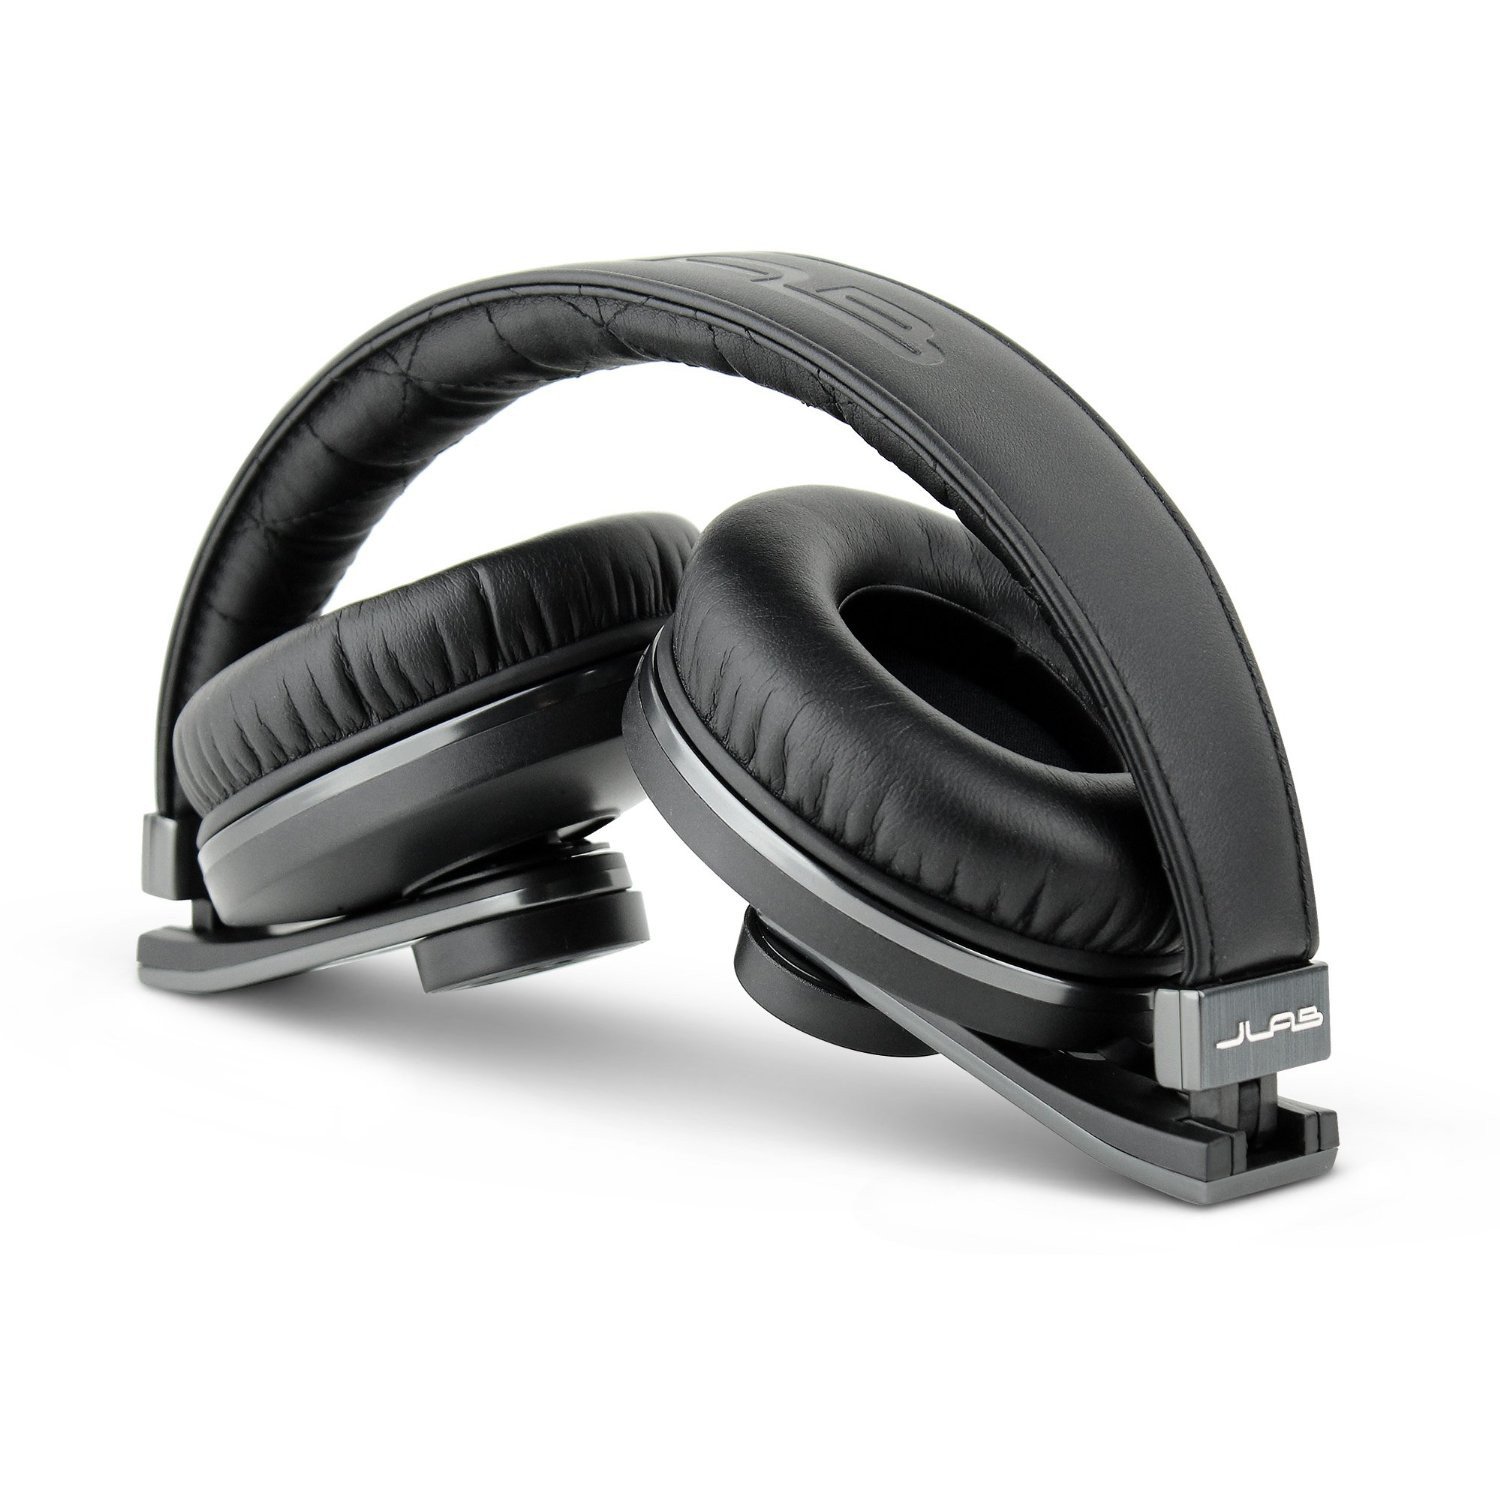 JLab Audio OMNI Premium Over-Ear Bluetooth Headphones with Mic - Black - image 2 of 7